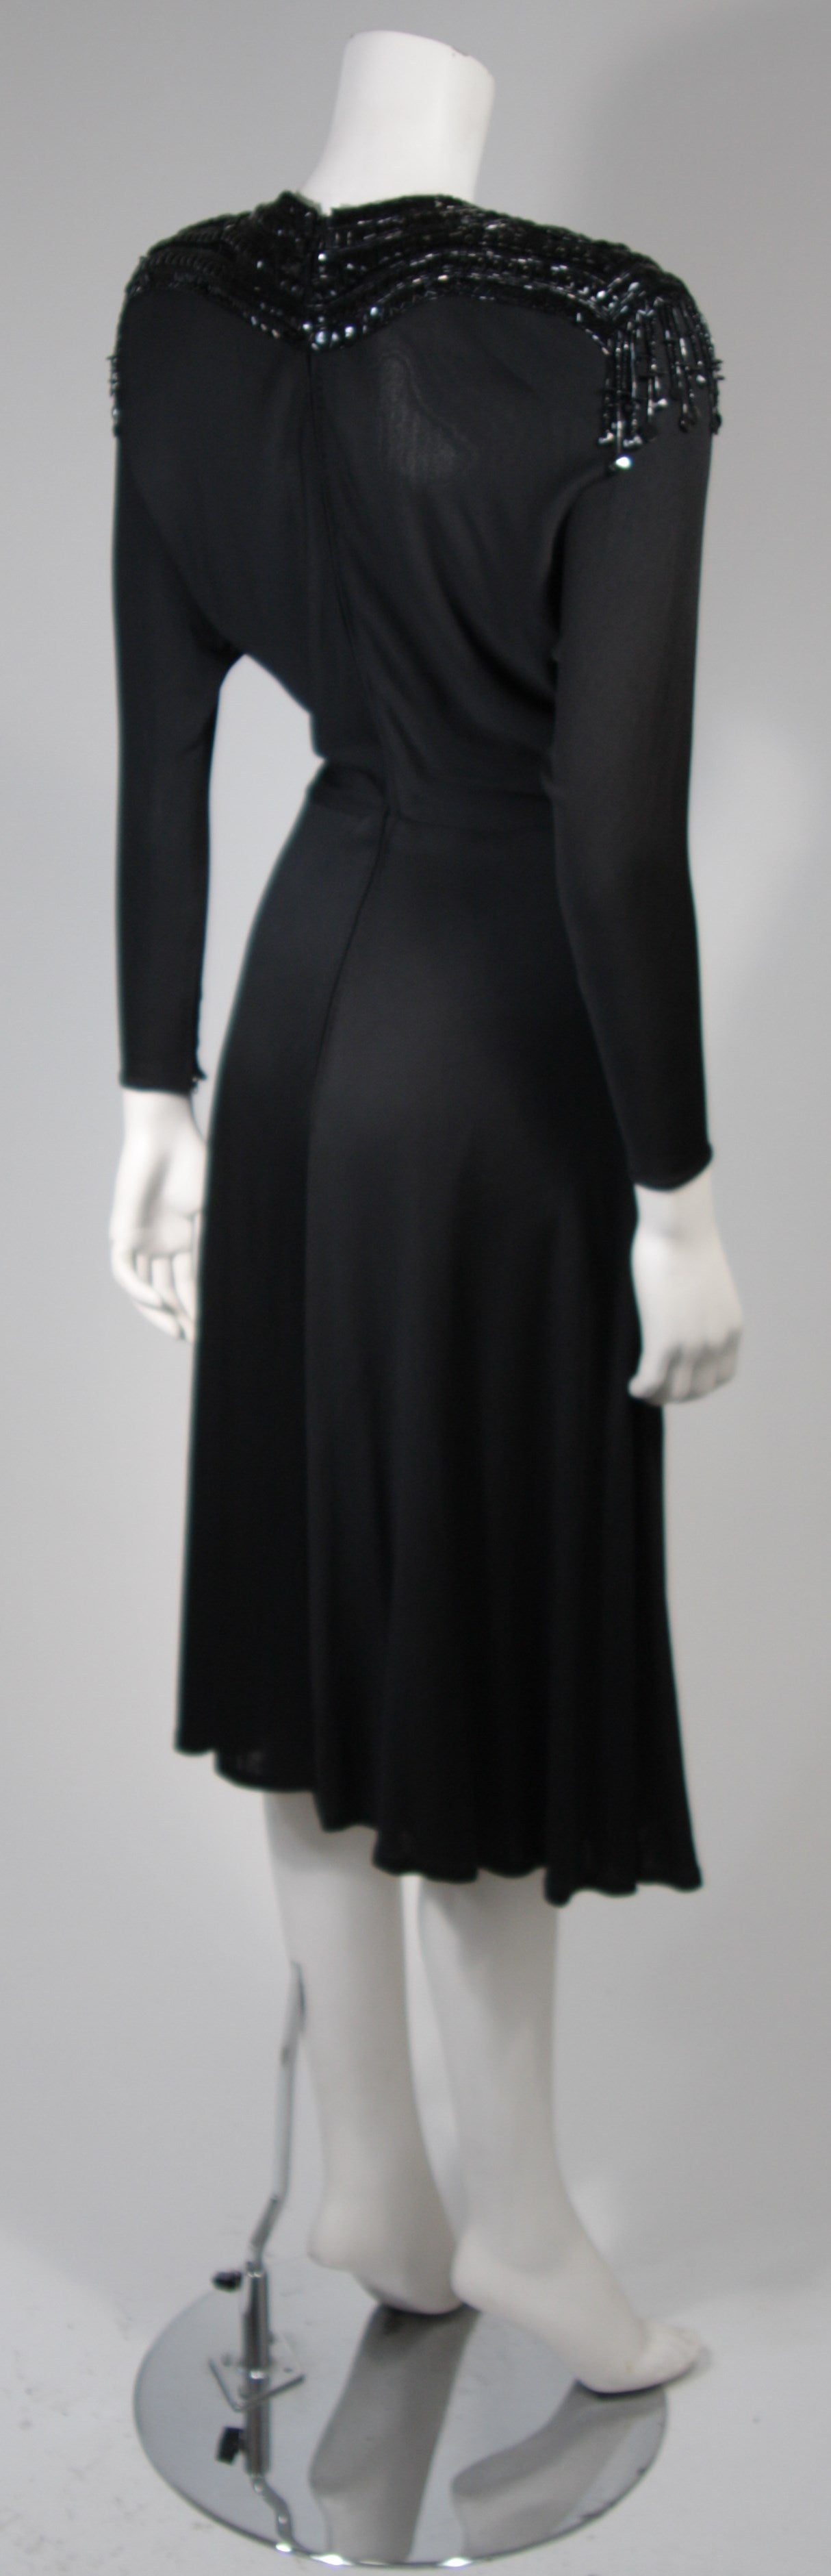 Nolan Miller Attributed Black Jersey Embellished Cocktail Dress Size Small For Sale 1